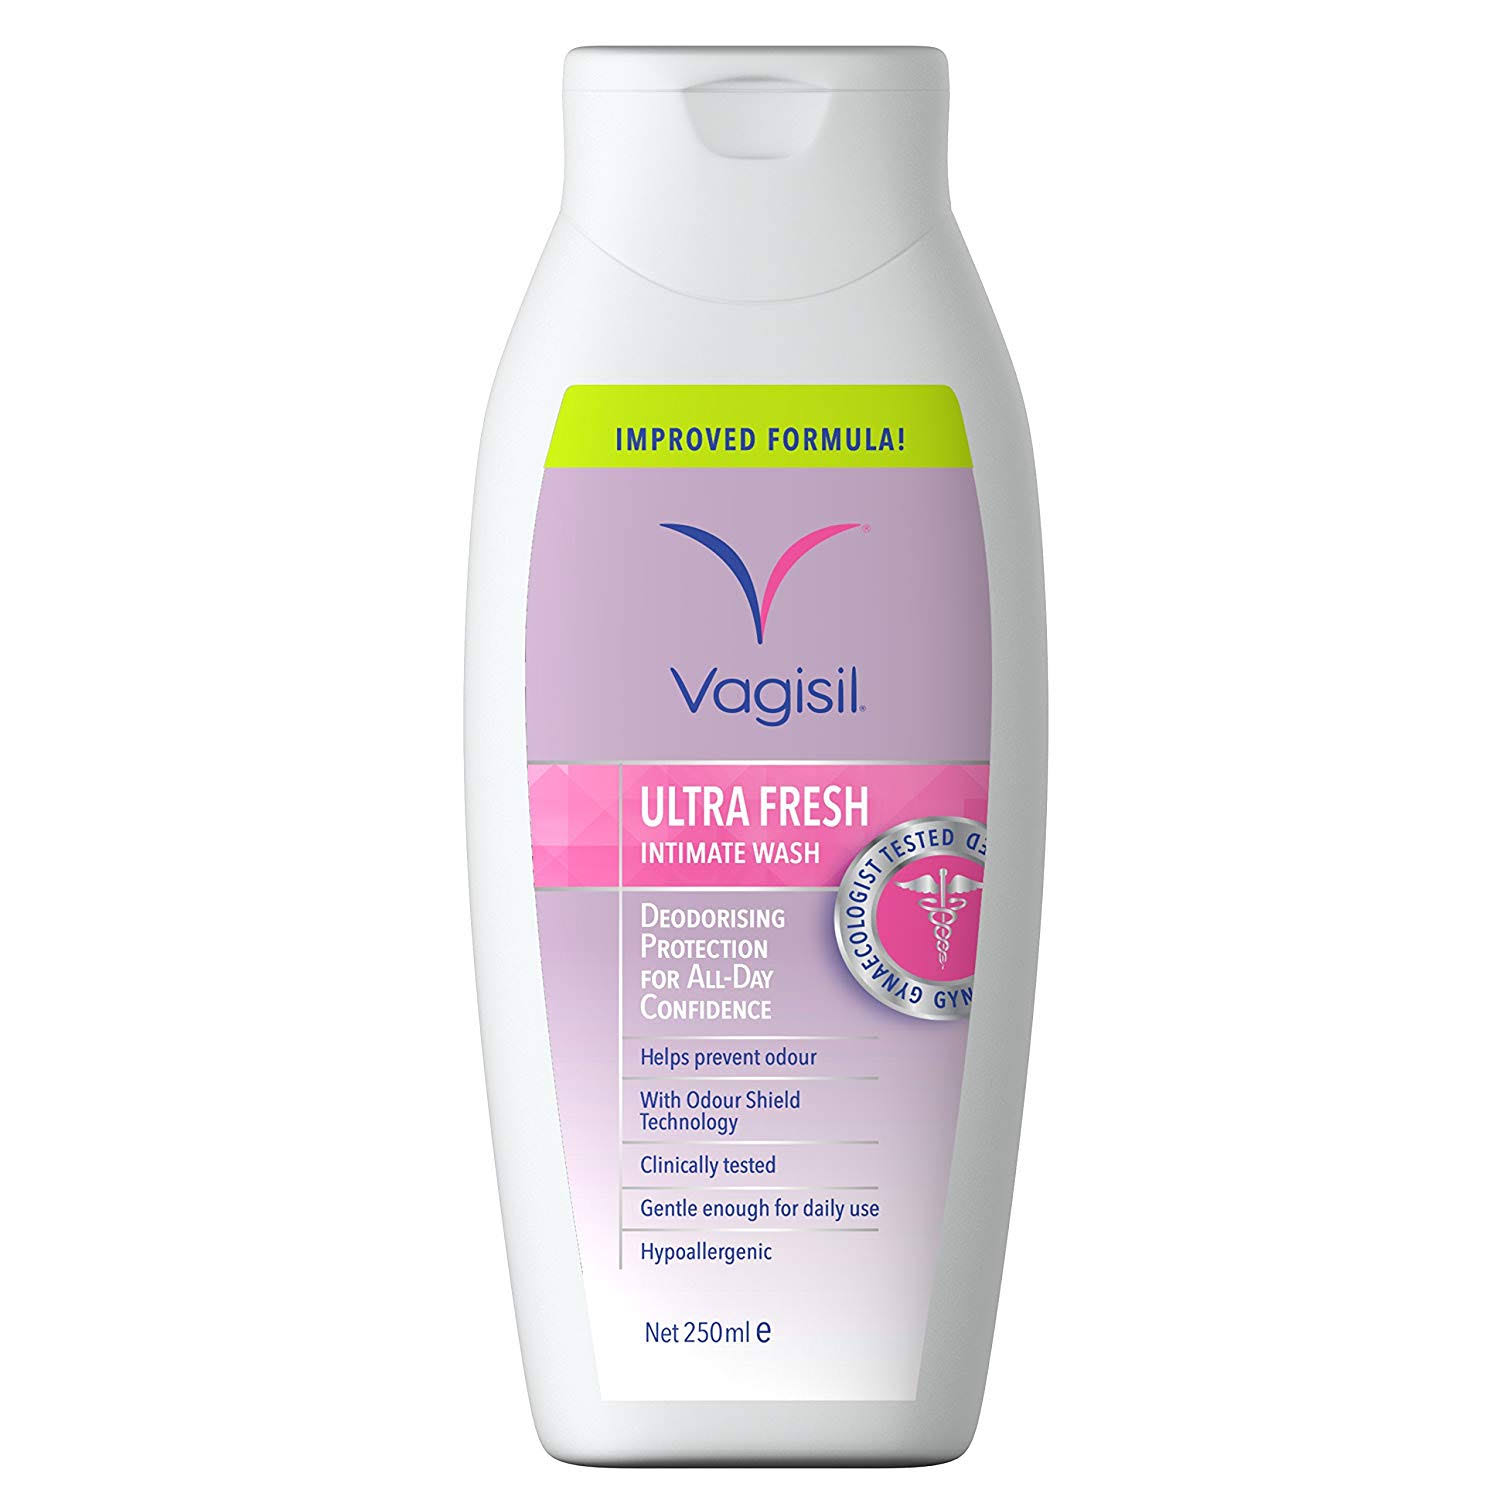 Vagisil Odour Shield Intimate Wash 250 ml